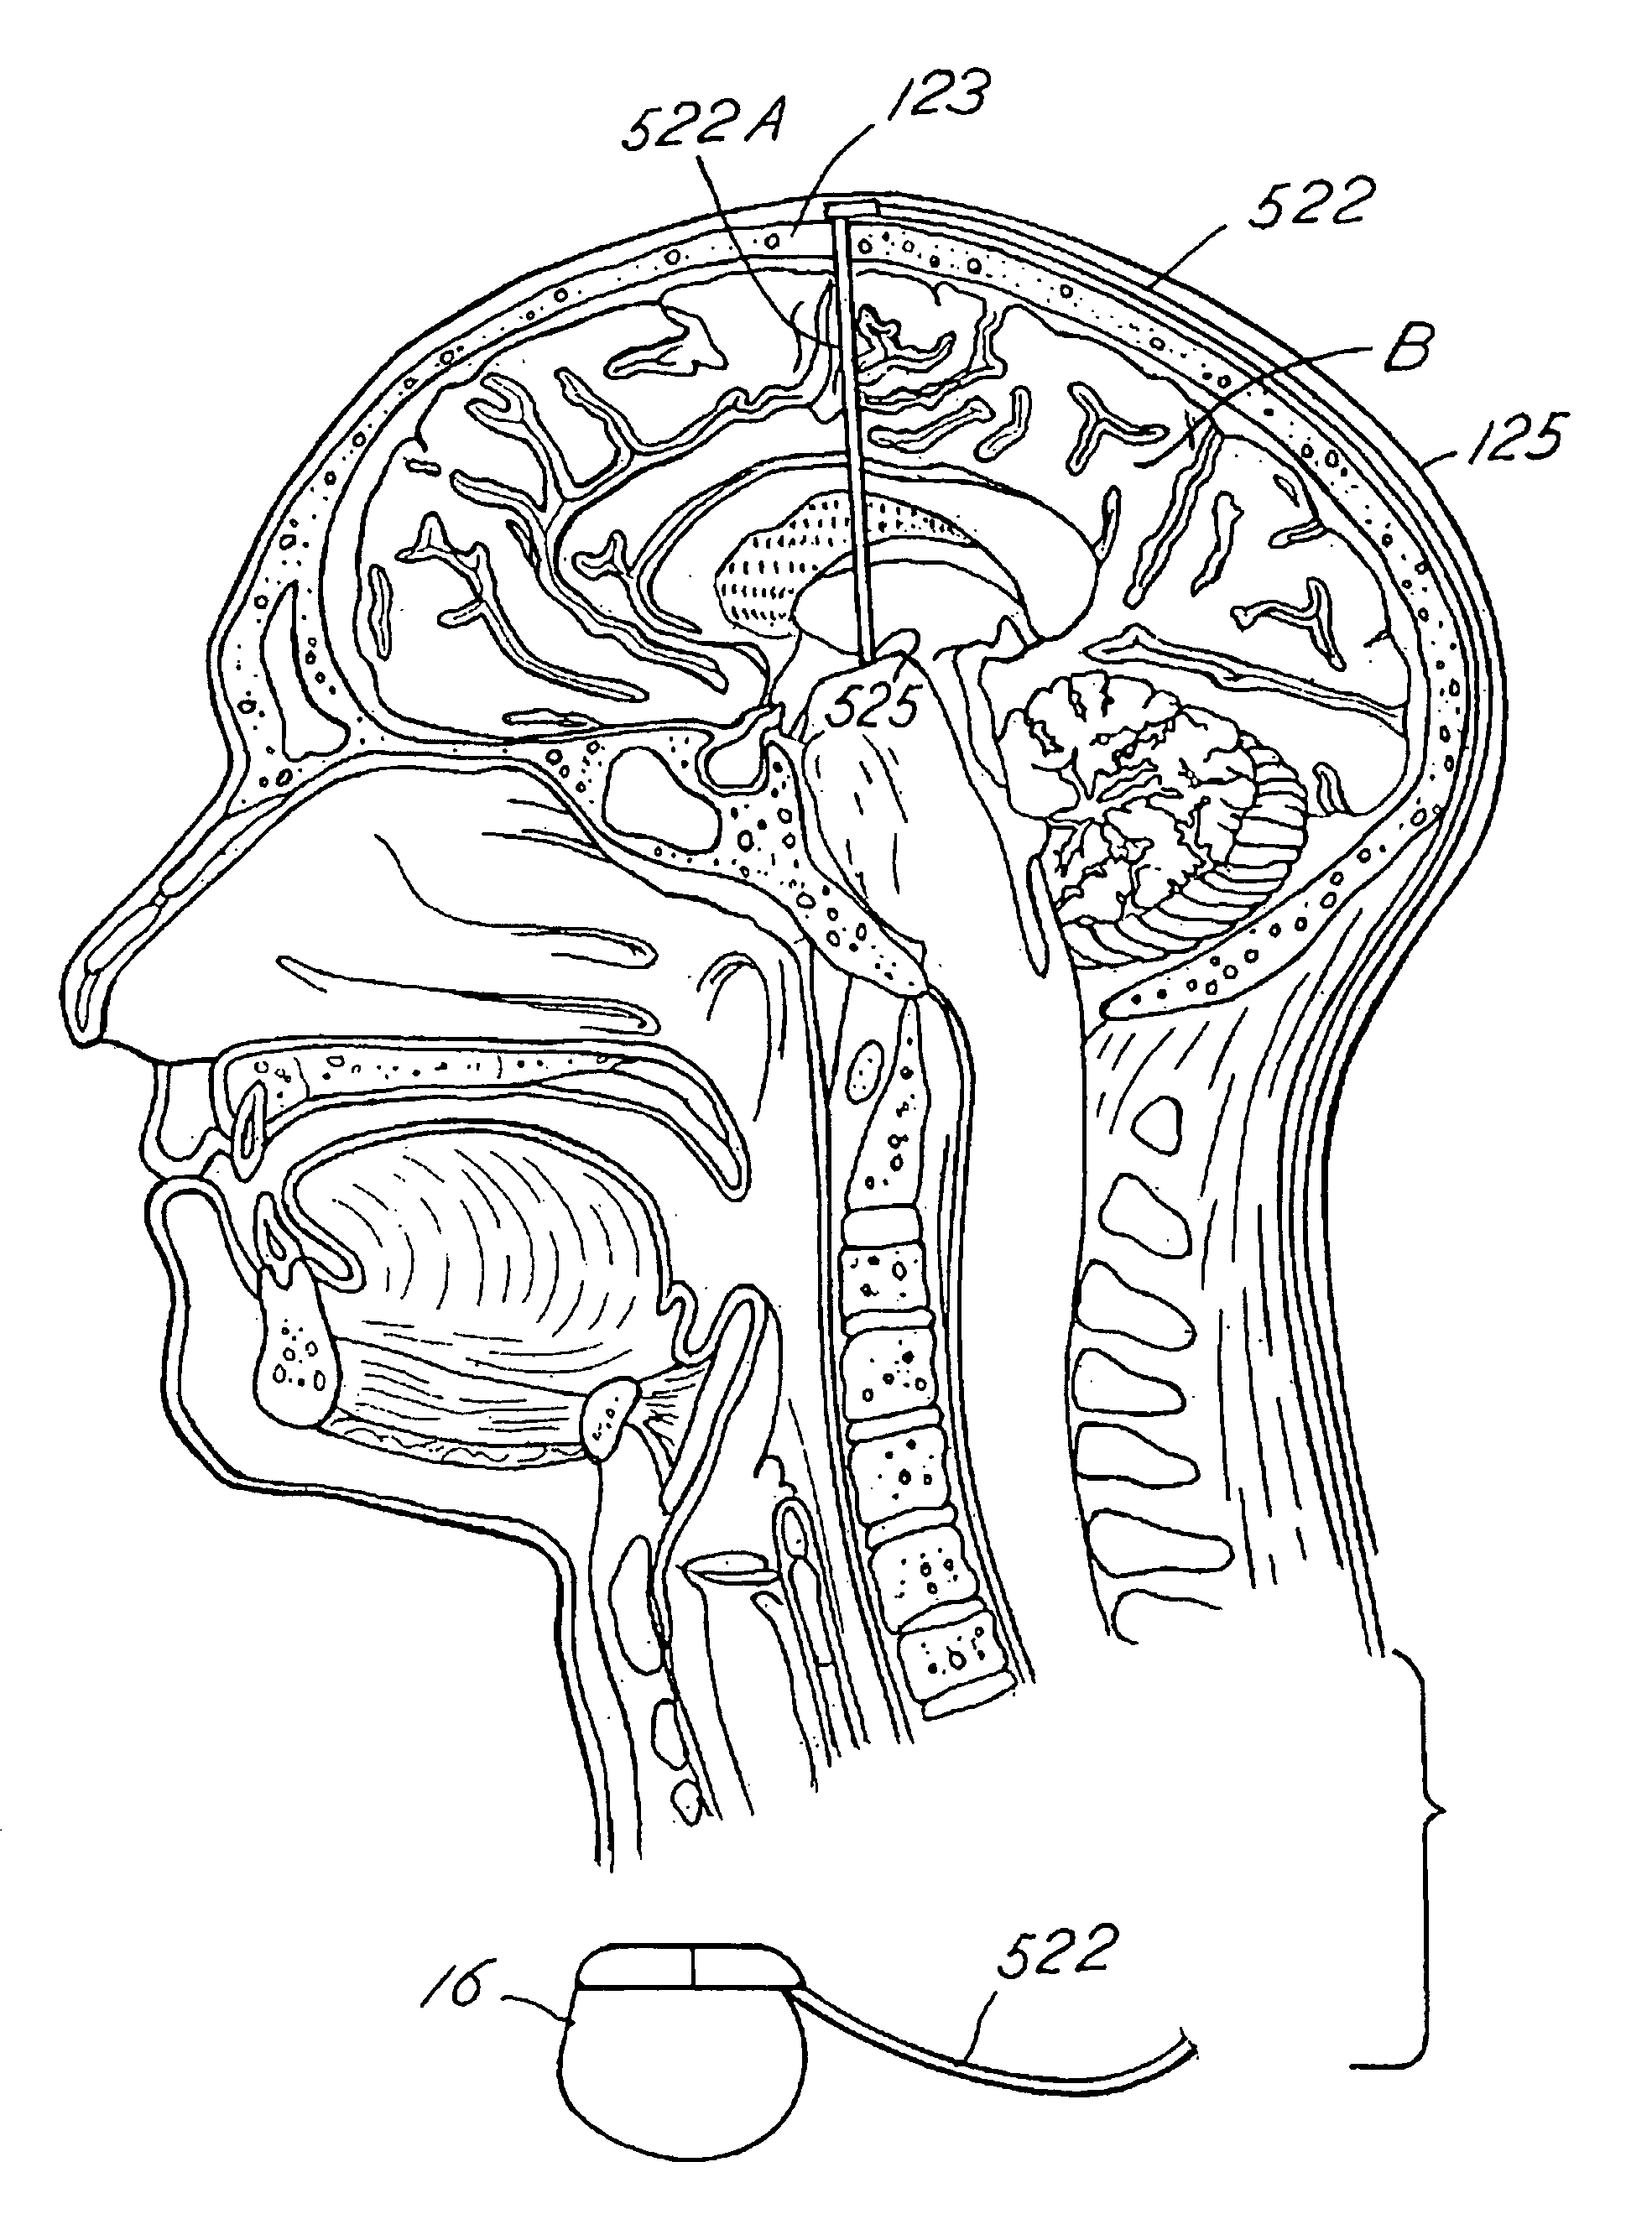 Regulation of neurotrophins